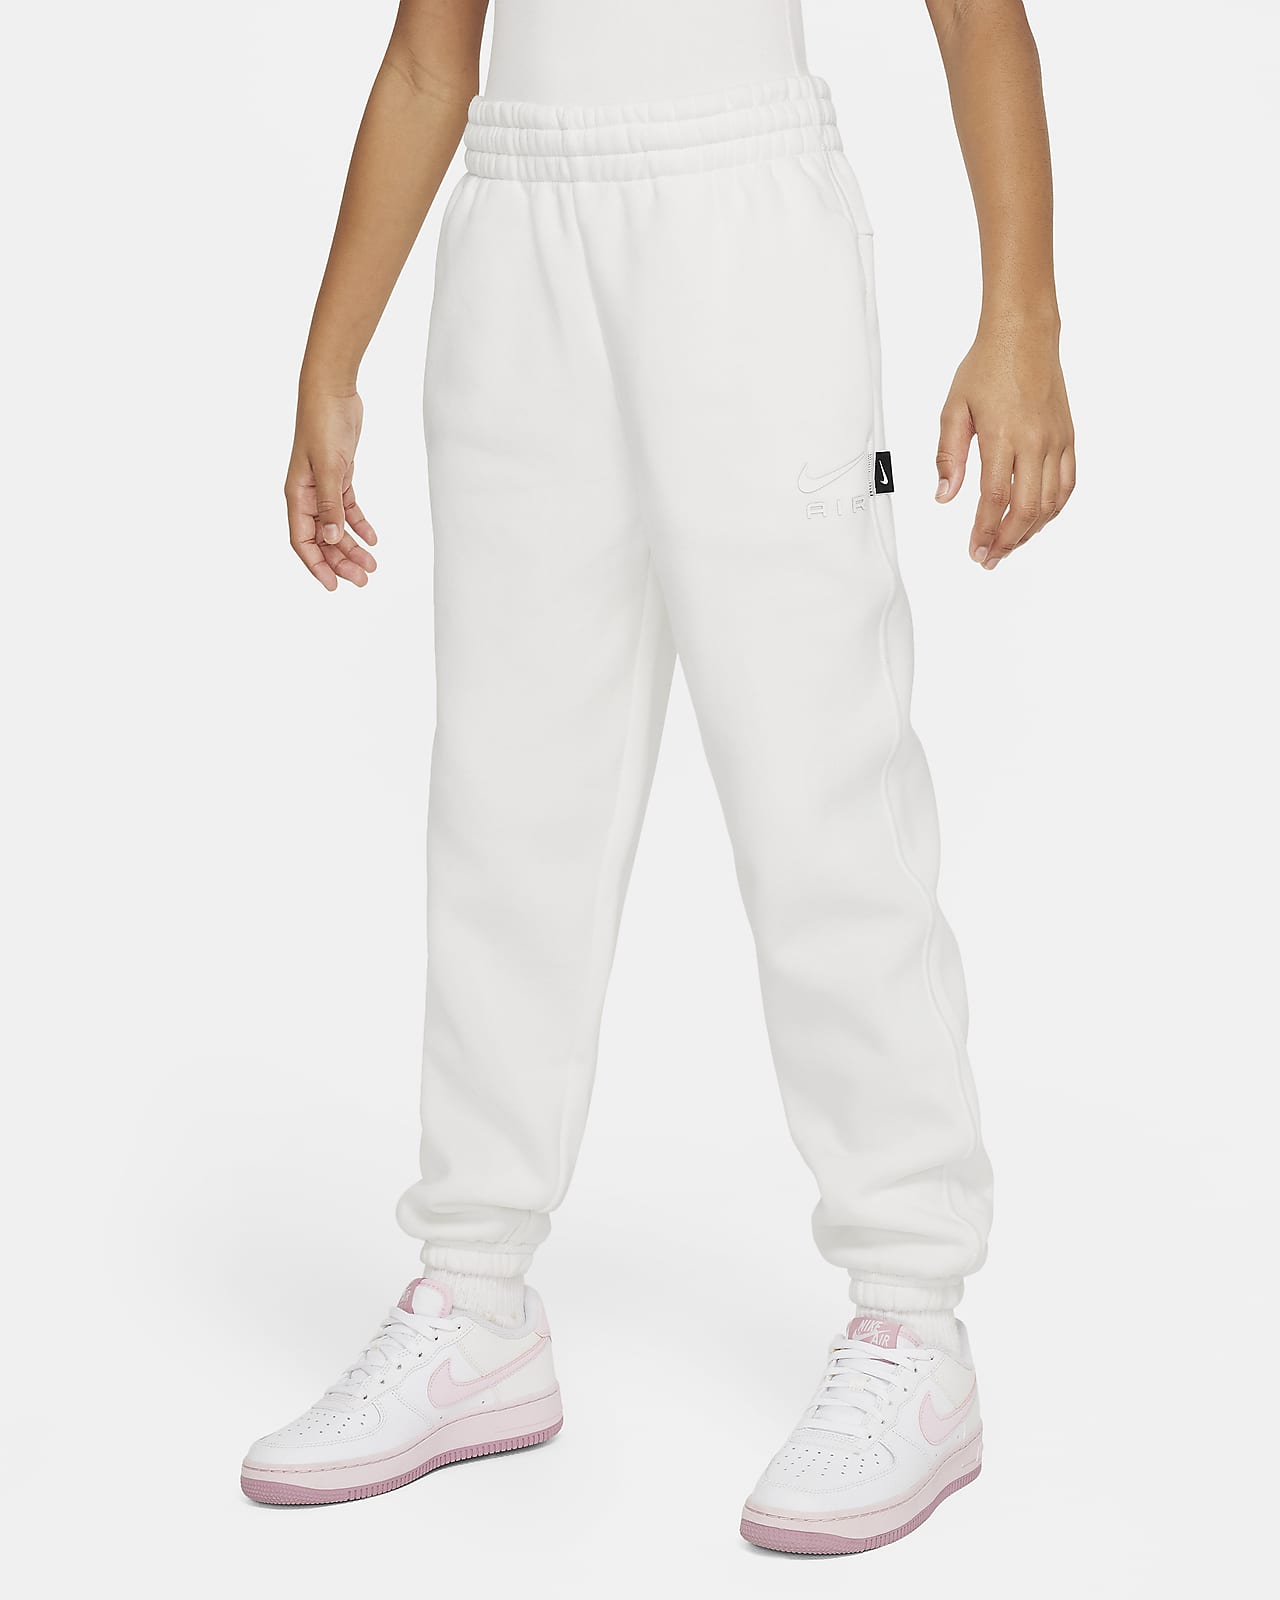 Nike Sportswear AIR PANT - Tracksuit bottoms - medium olive/white/olive -  Zalando.de